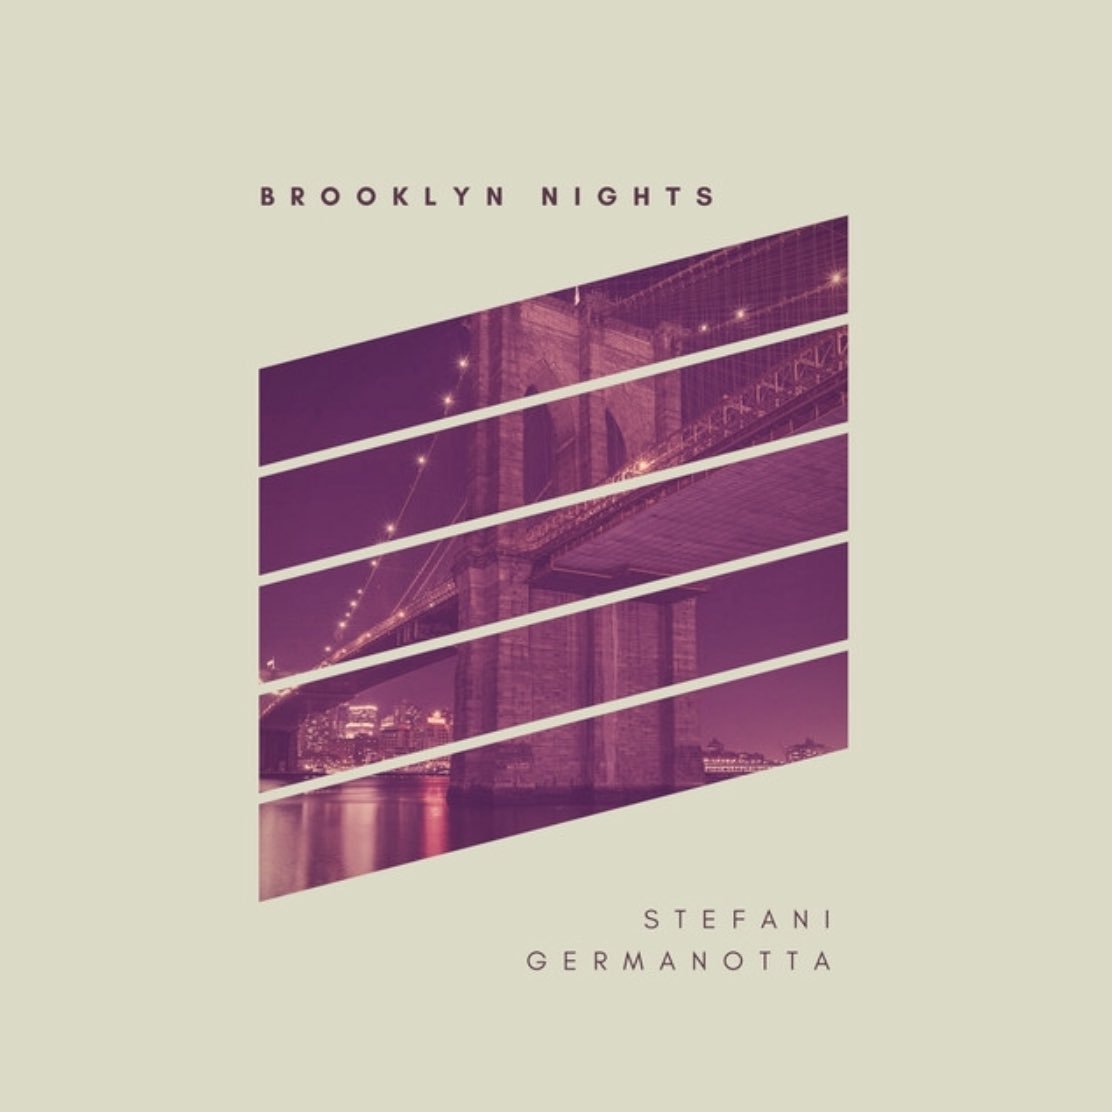 xojoanne:  The unofficial ‘Brooklyn Nights’ by Stefani Germanotta is #58 on USA